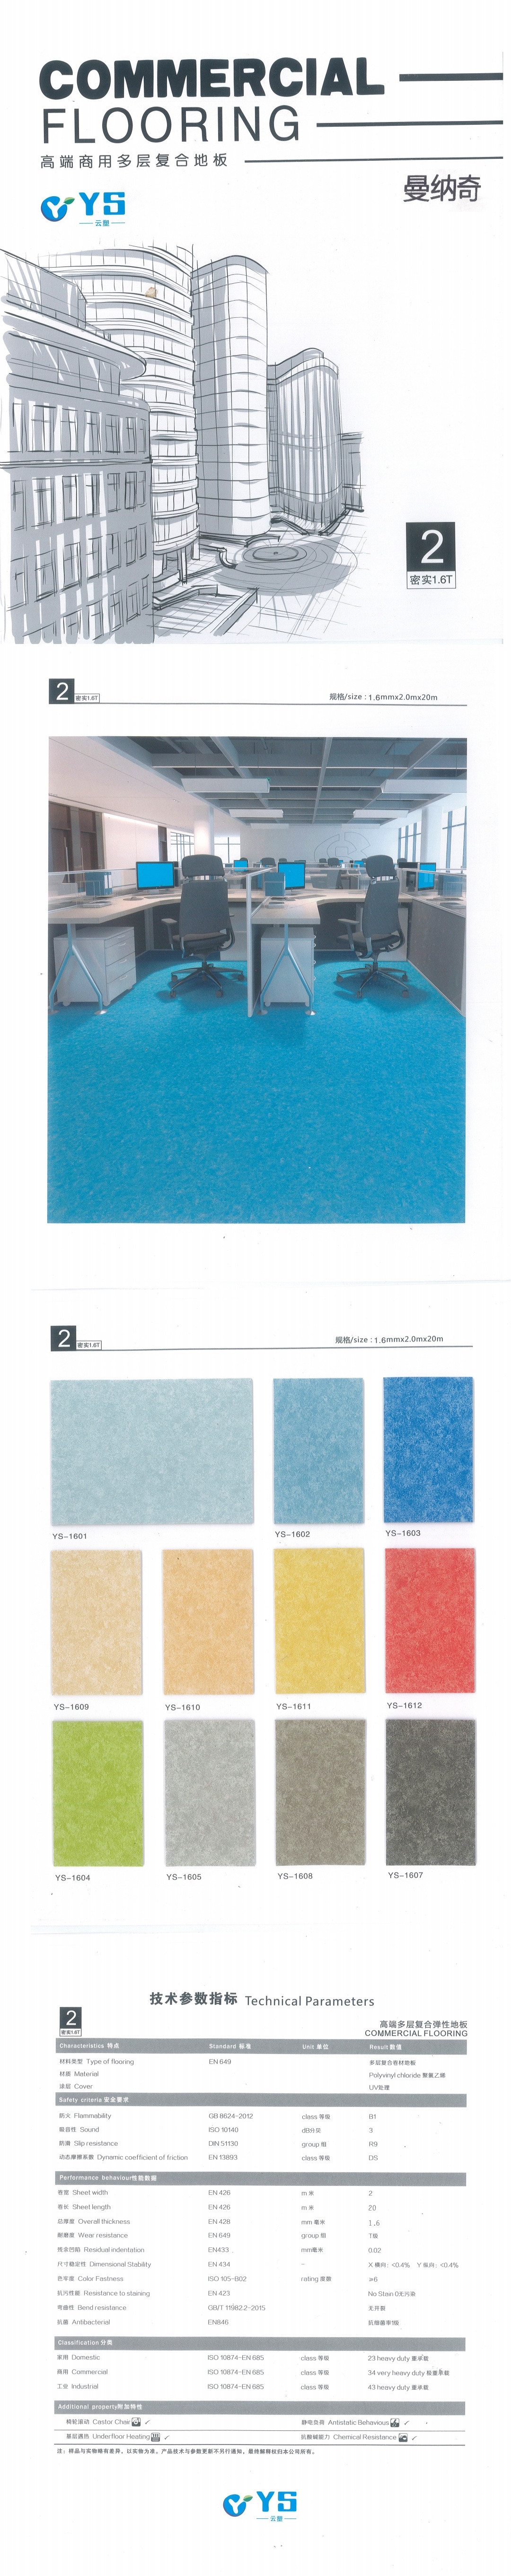 pvc塑胶地板曼纳奇品牌，pvc地板品牌-专业生产厂家示例图2